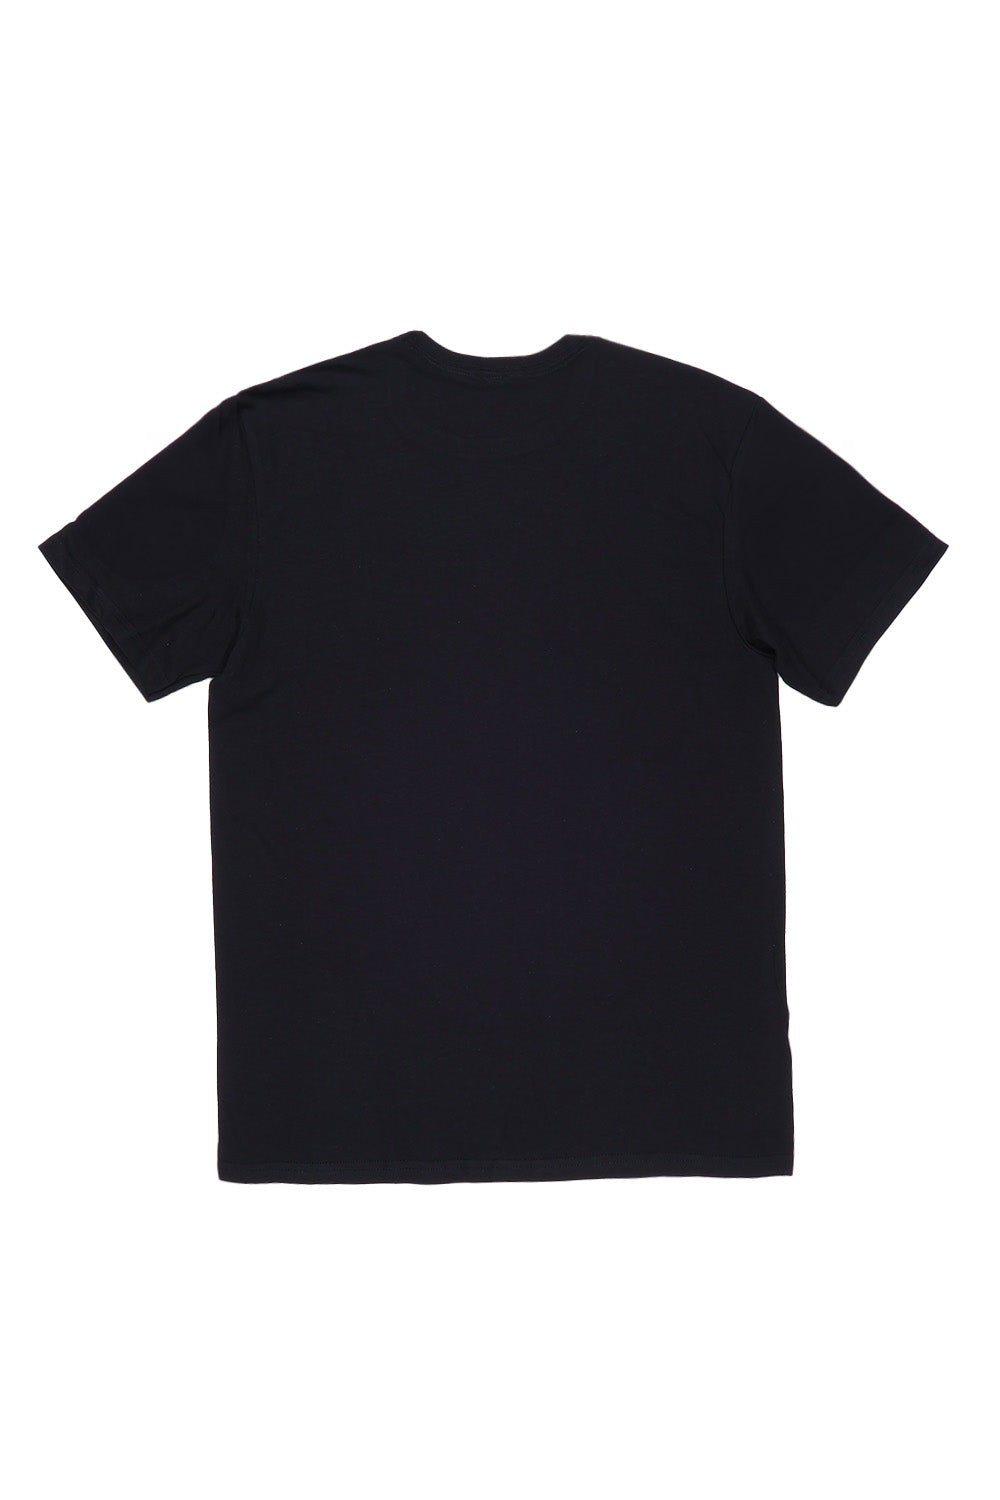 Santa Monica T-Shirt in Black (Custom Packs)